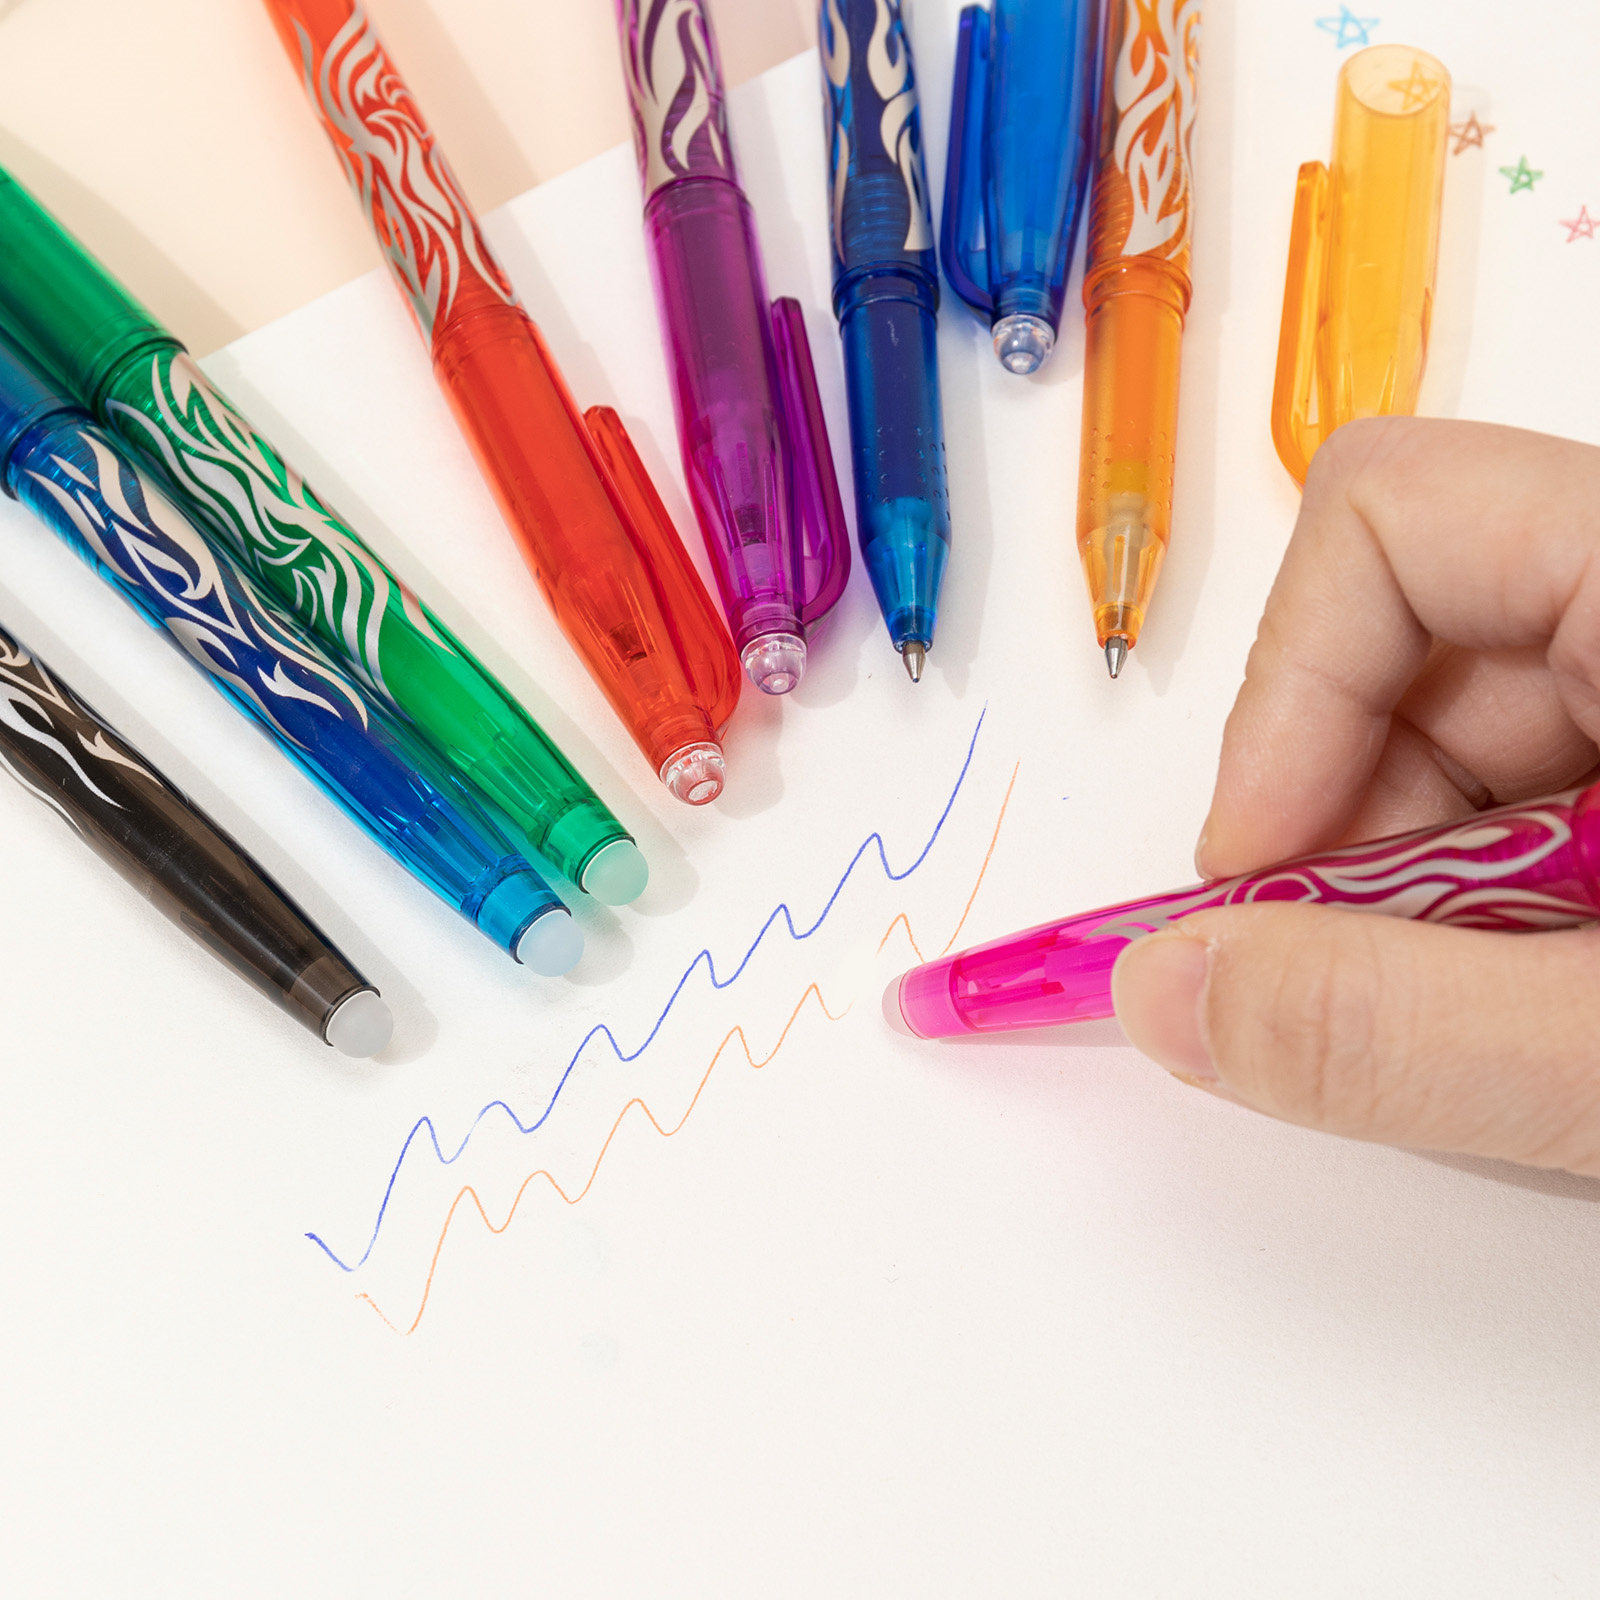 Colored Erasable Gel Pens - Set of 18